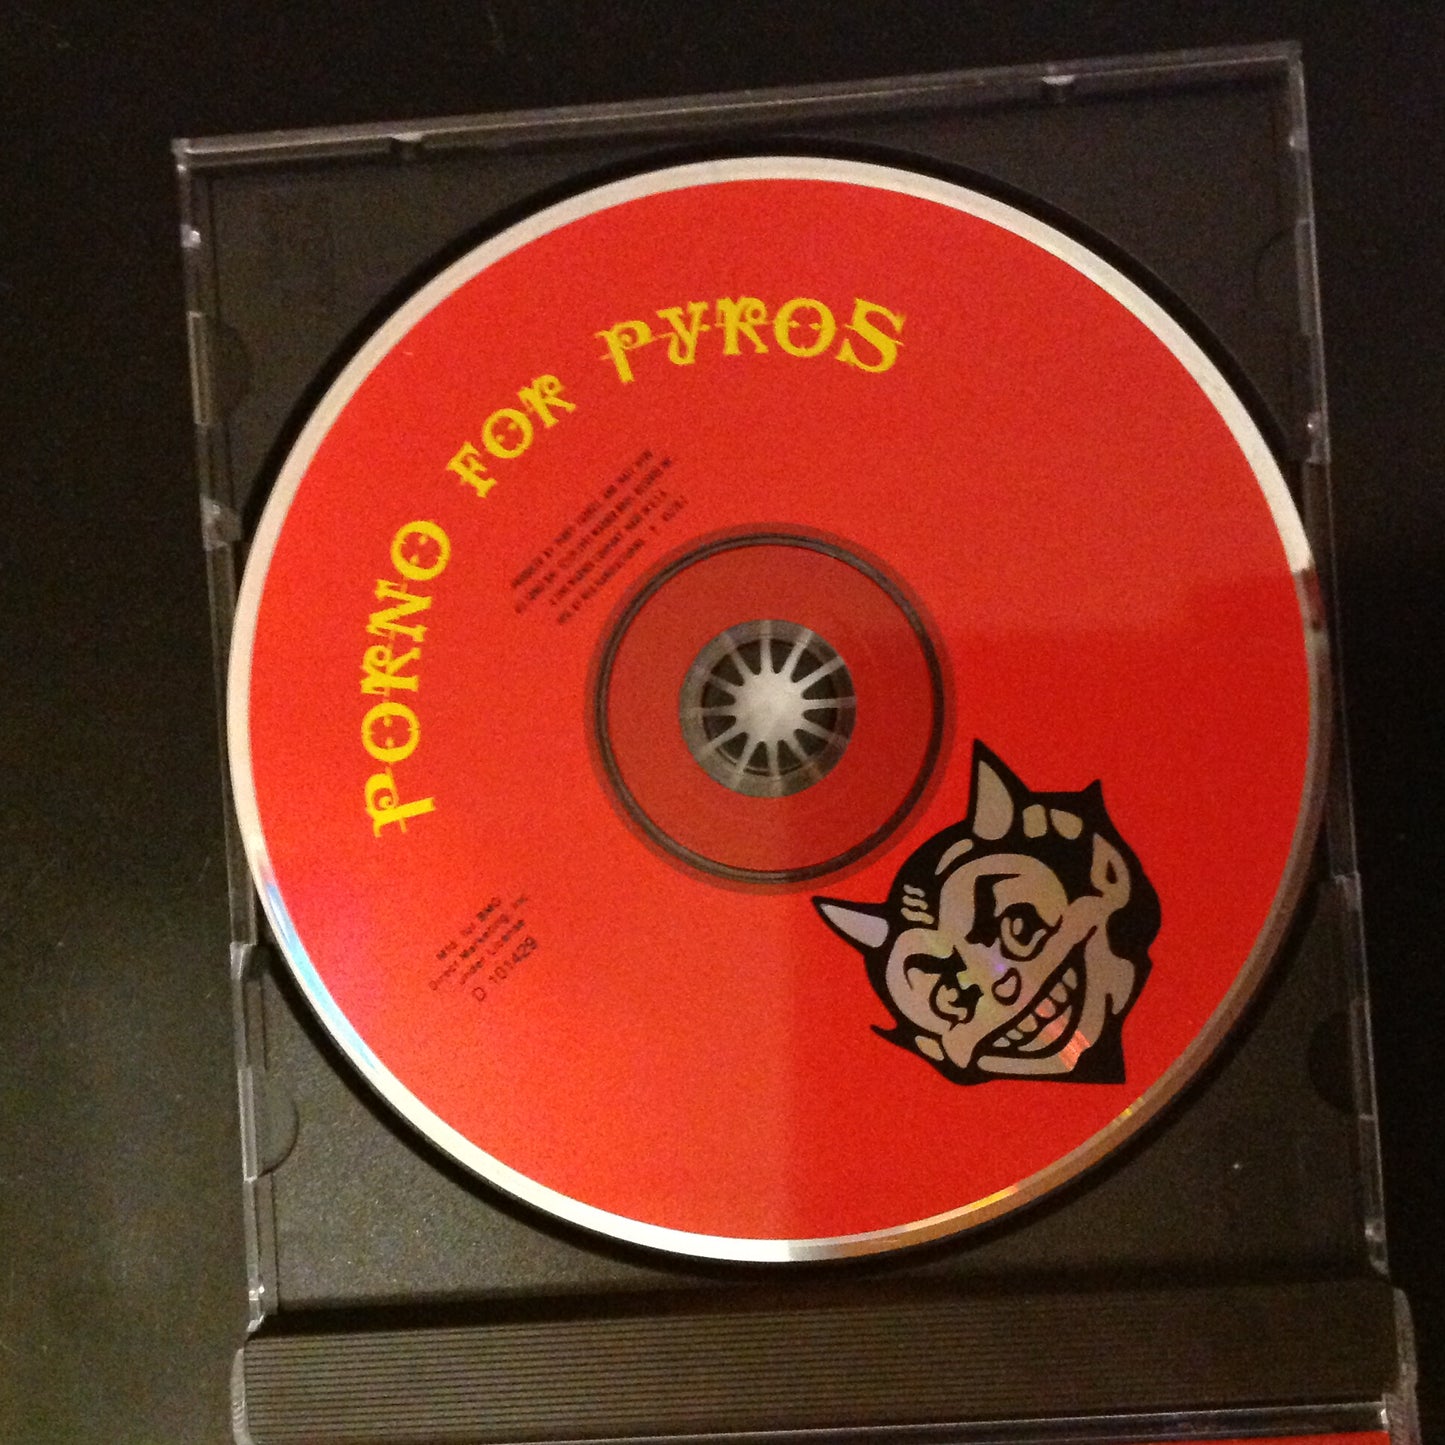 CD Porno For Pyros 945228-2 Rock Alternative